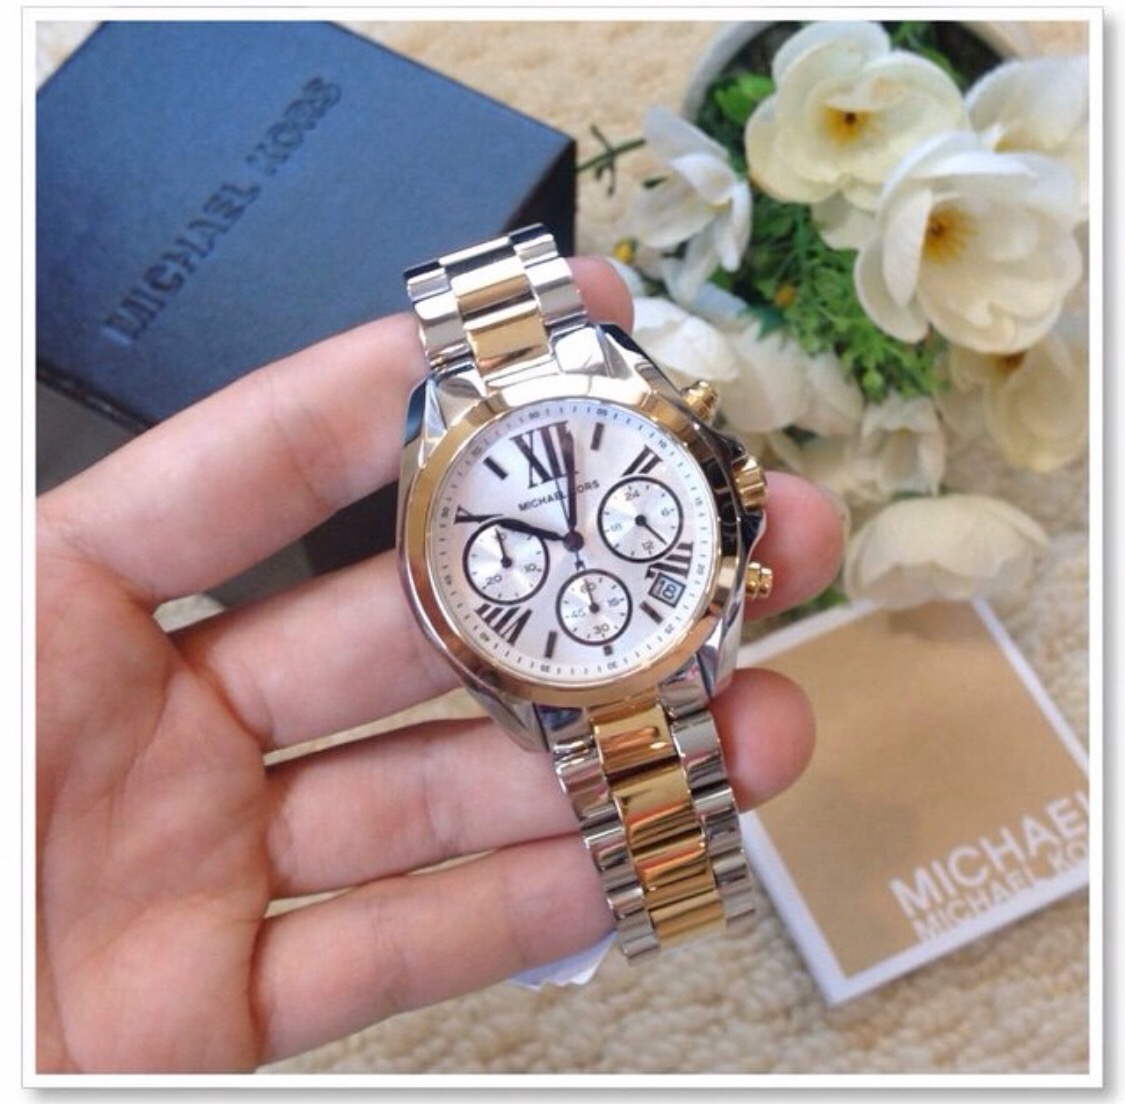 Amazoncom Michael Kors Womens Runway Rose GoldTone Watch MK3197  Michael  Kors Clothing Shoes  Jewelry